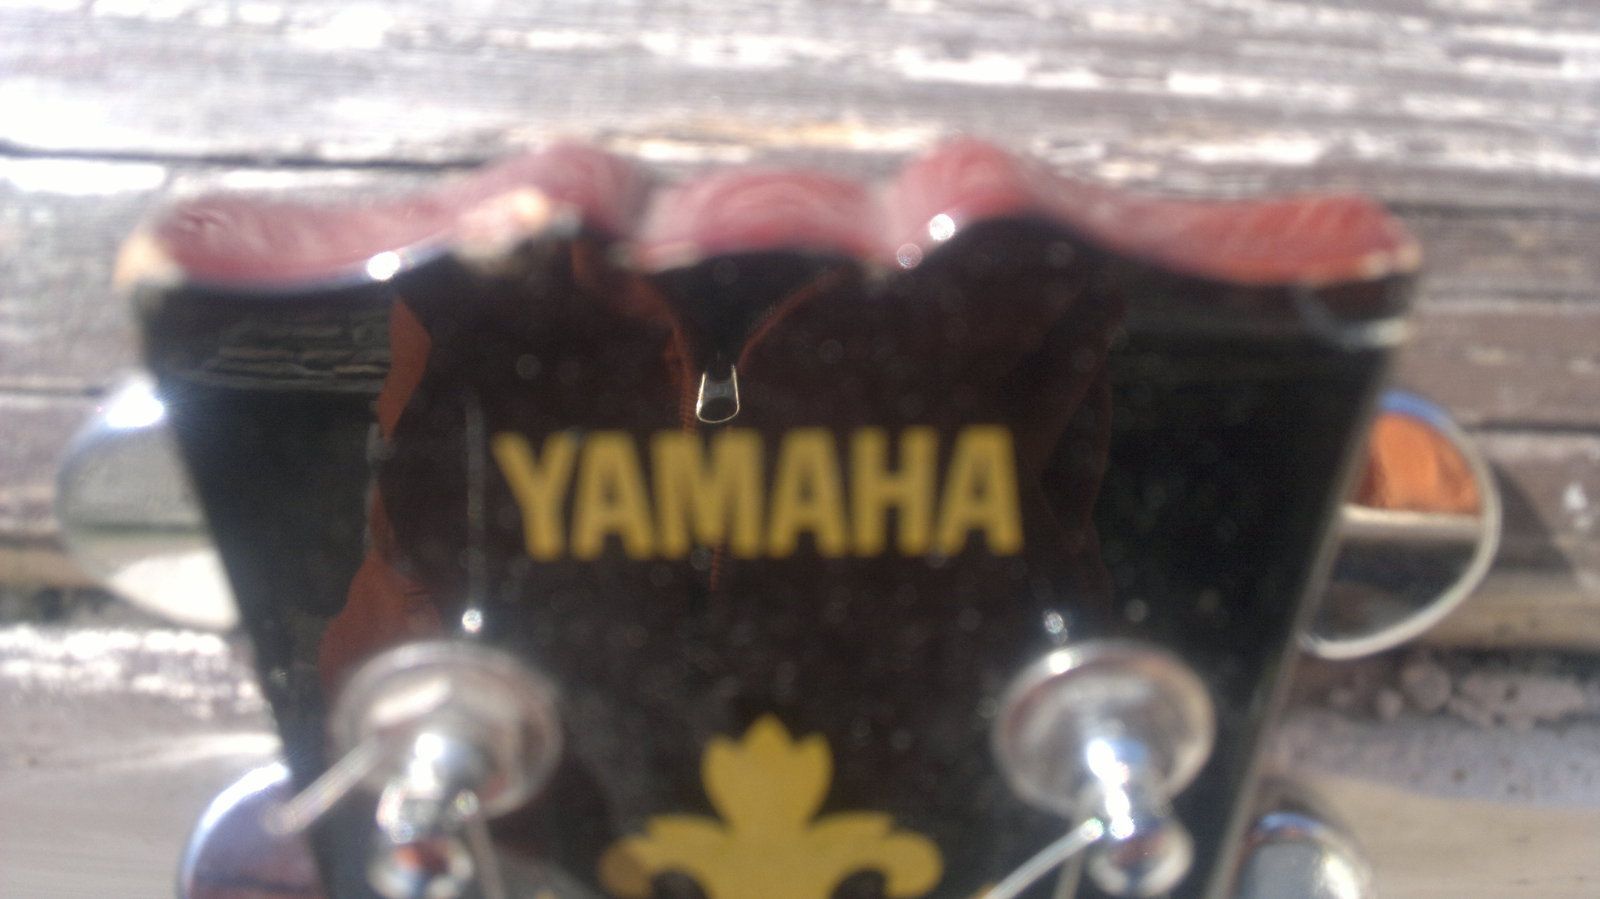 yamaha sbg 500